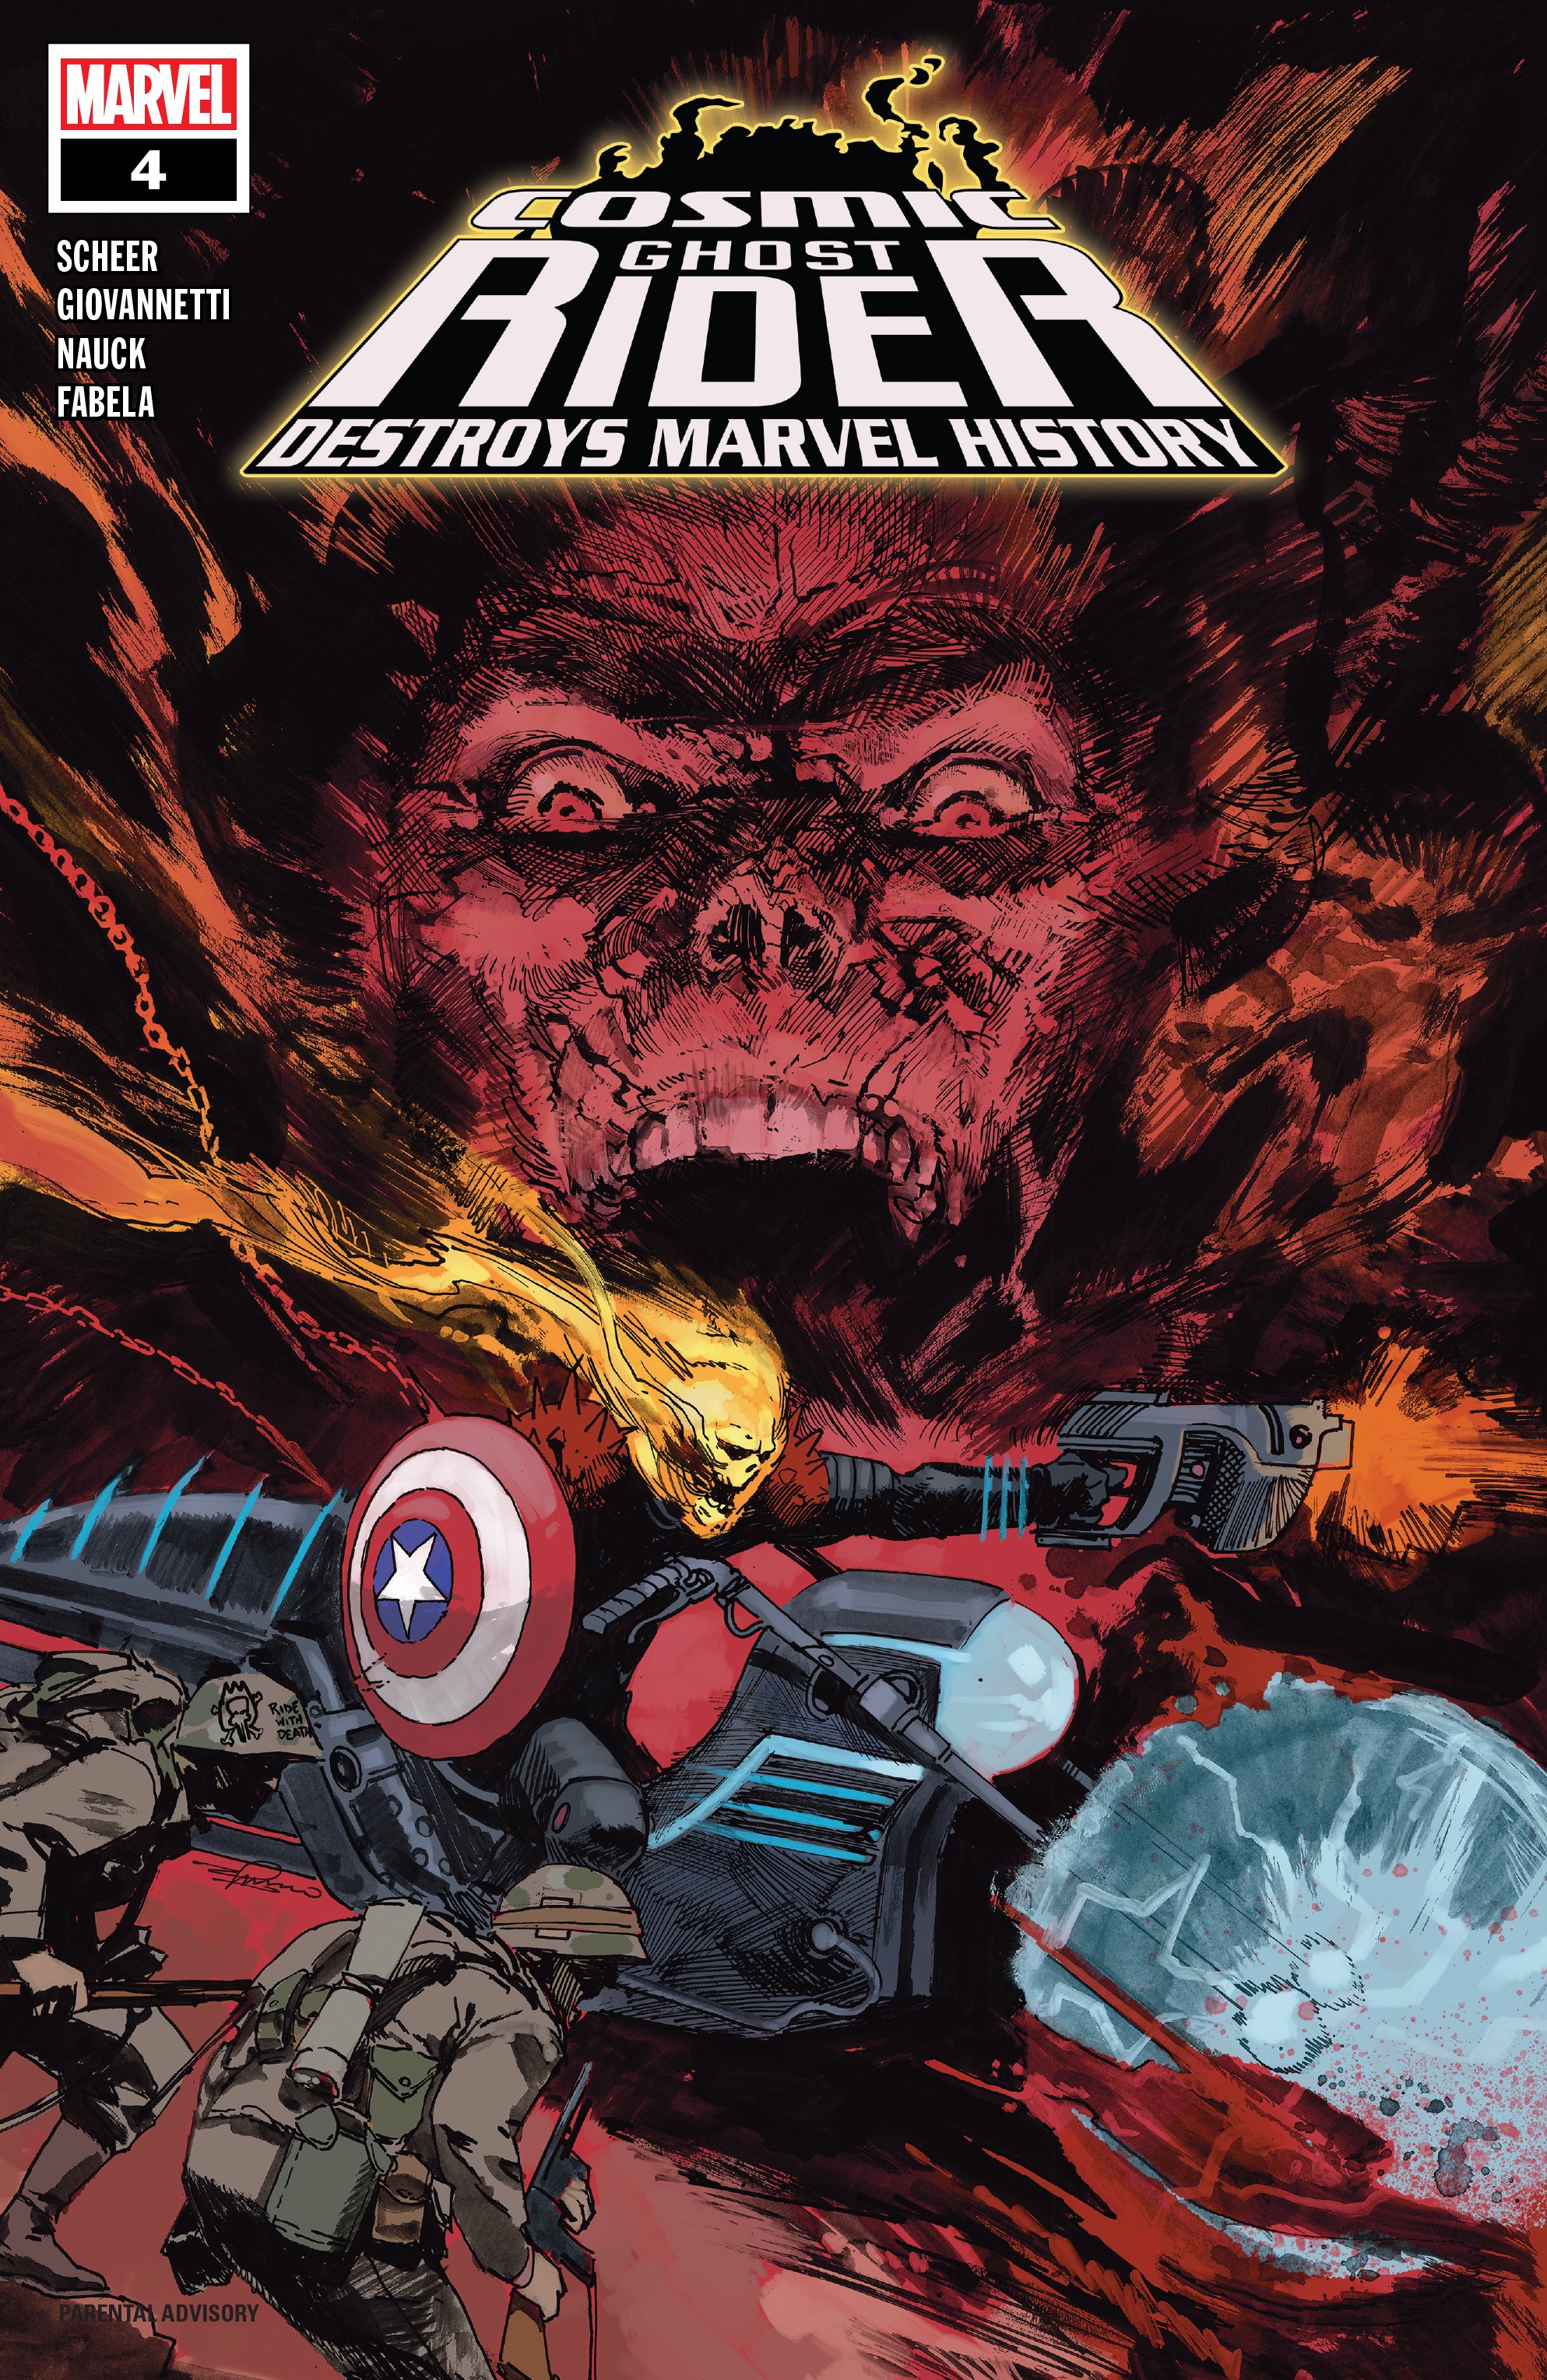 Cosmic Ghost Rider Destroys Marvel H